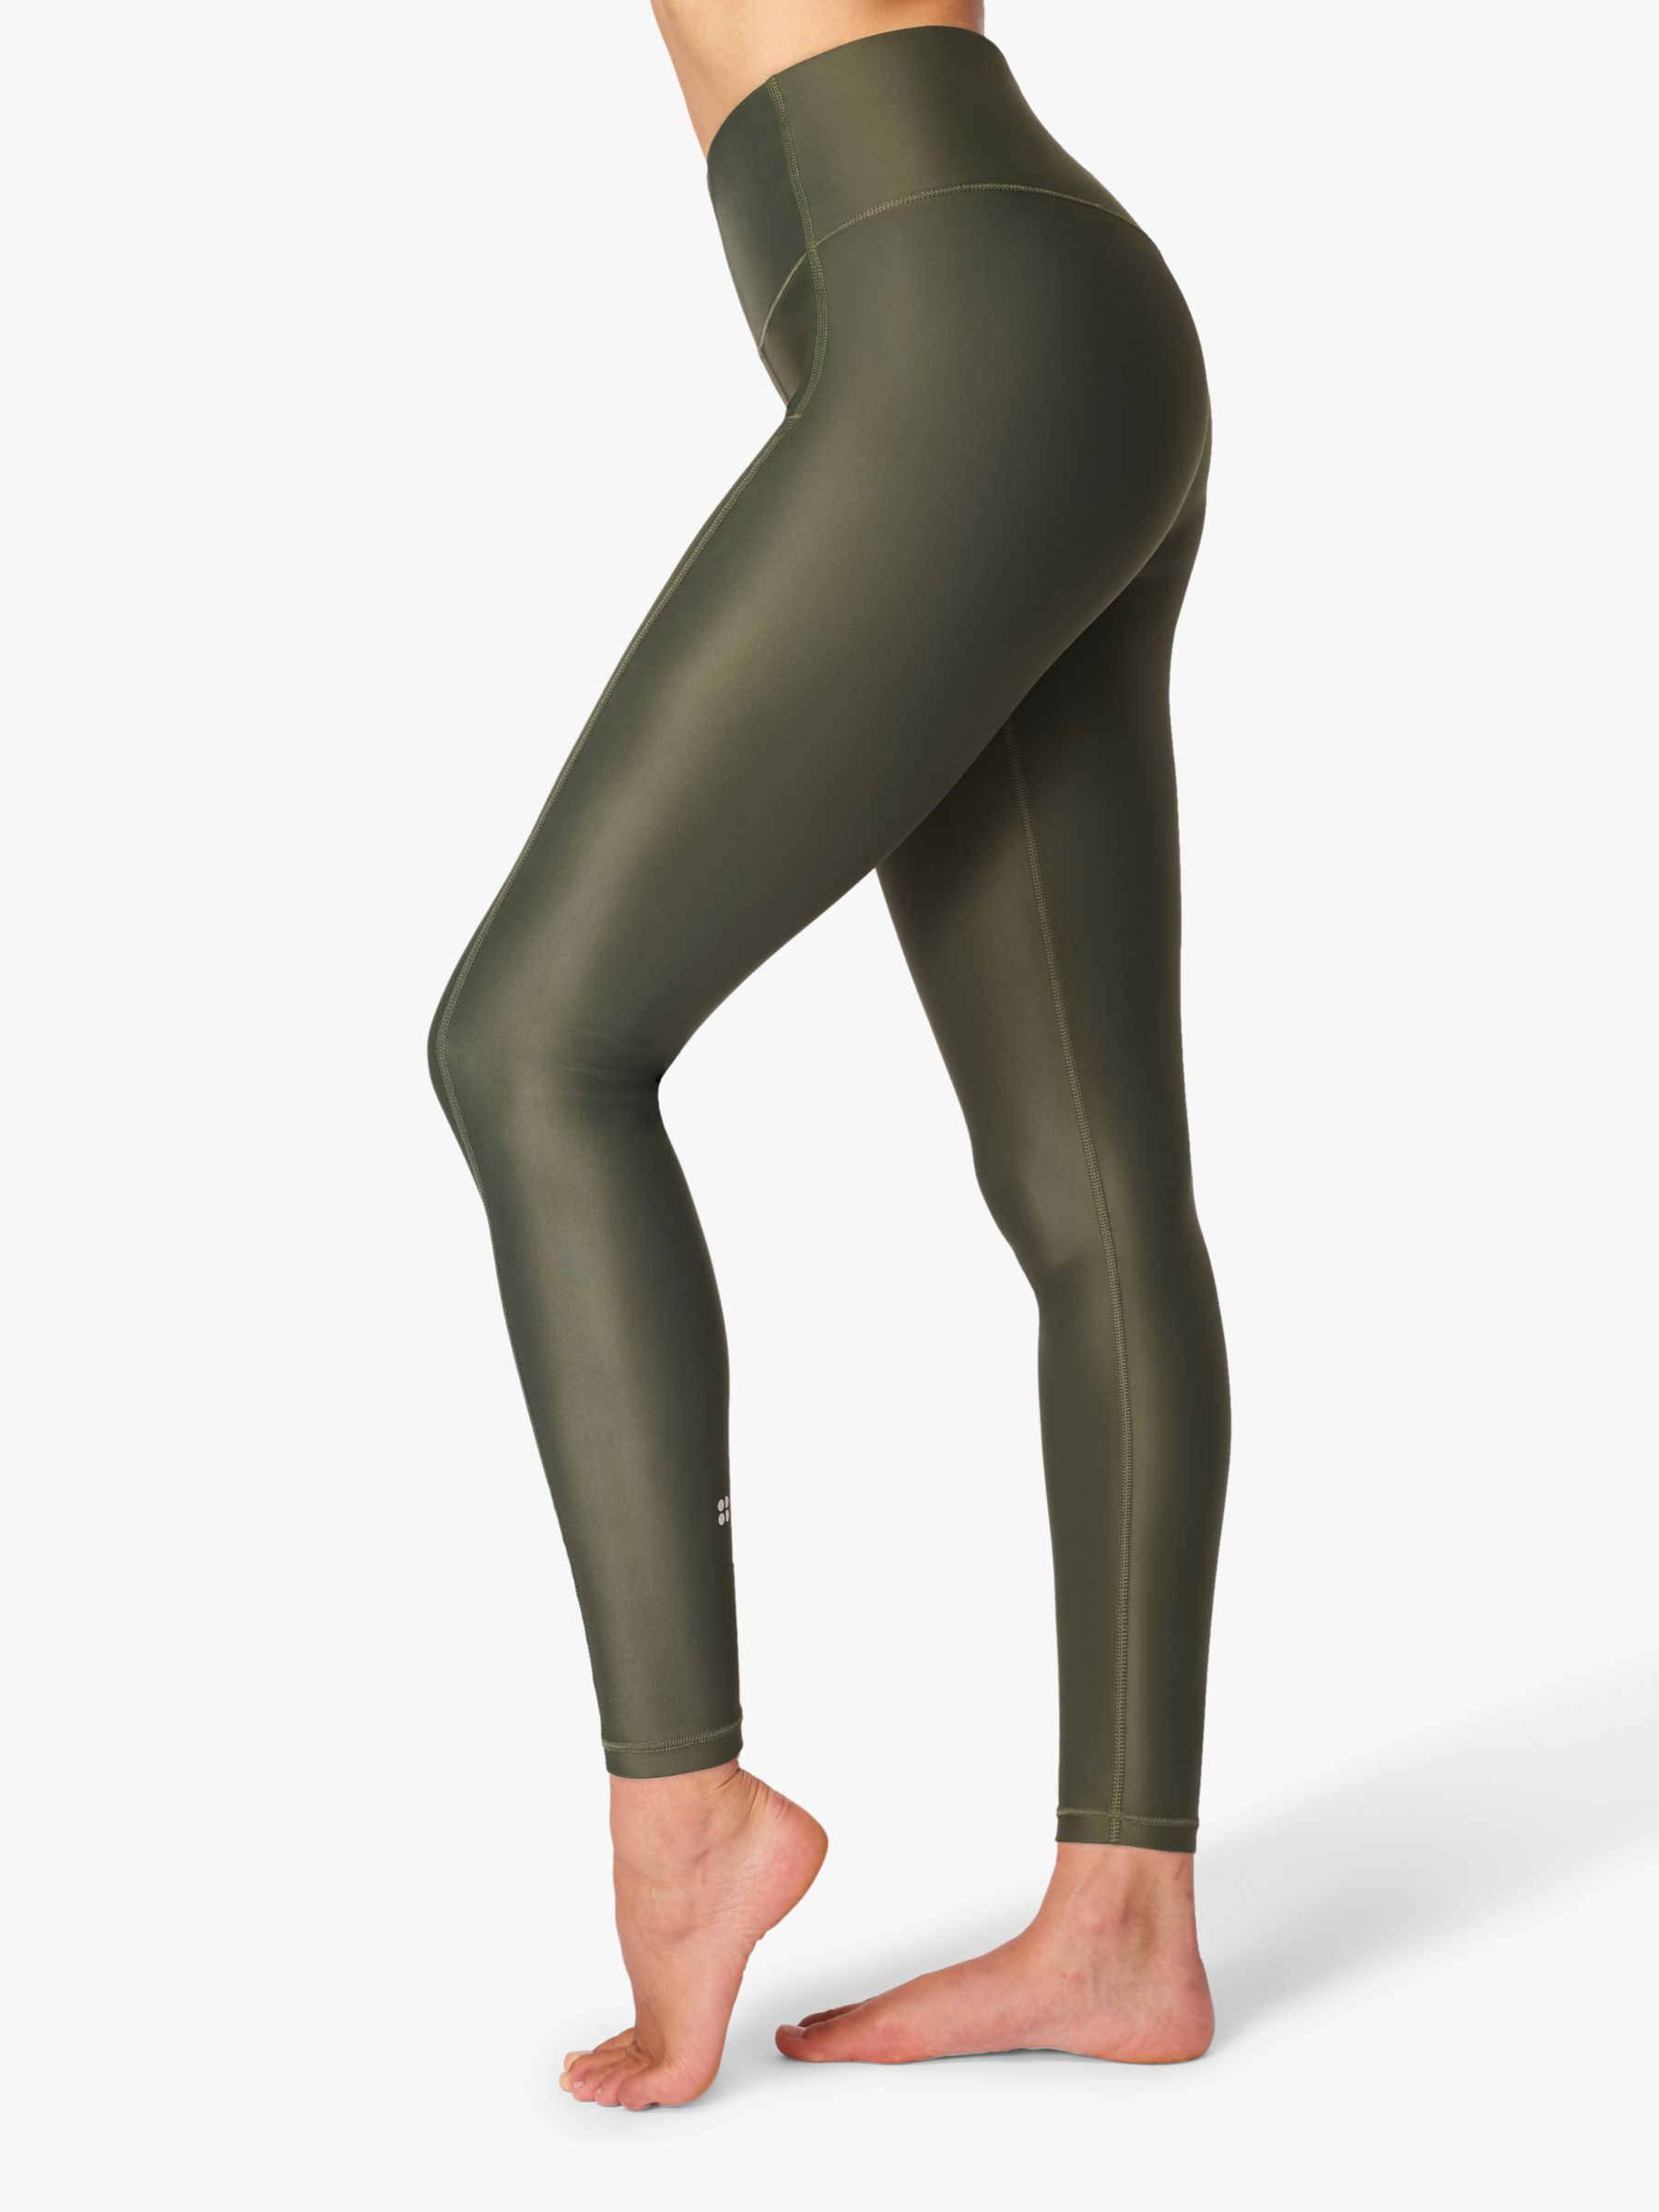 Sweaty Betty High-shine 7/8 Workout leggings in Black